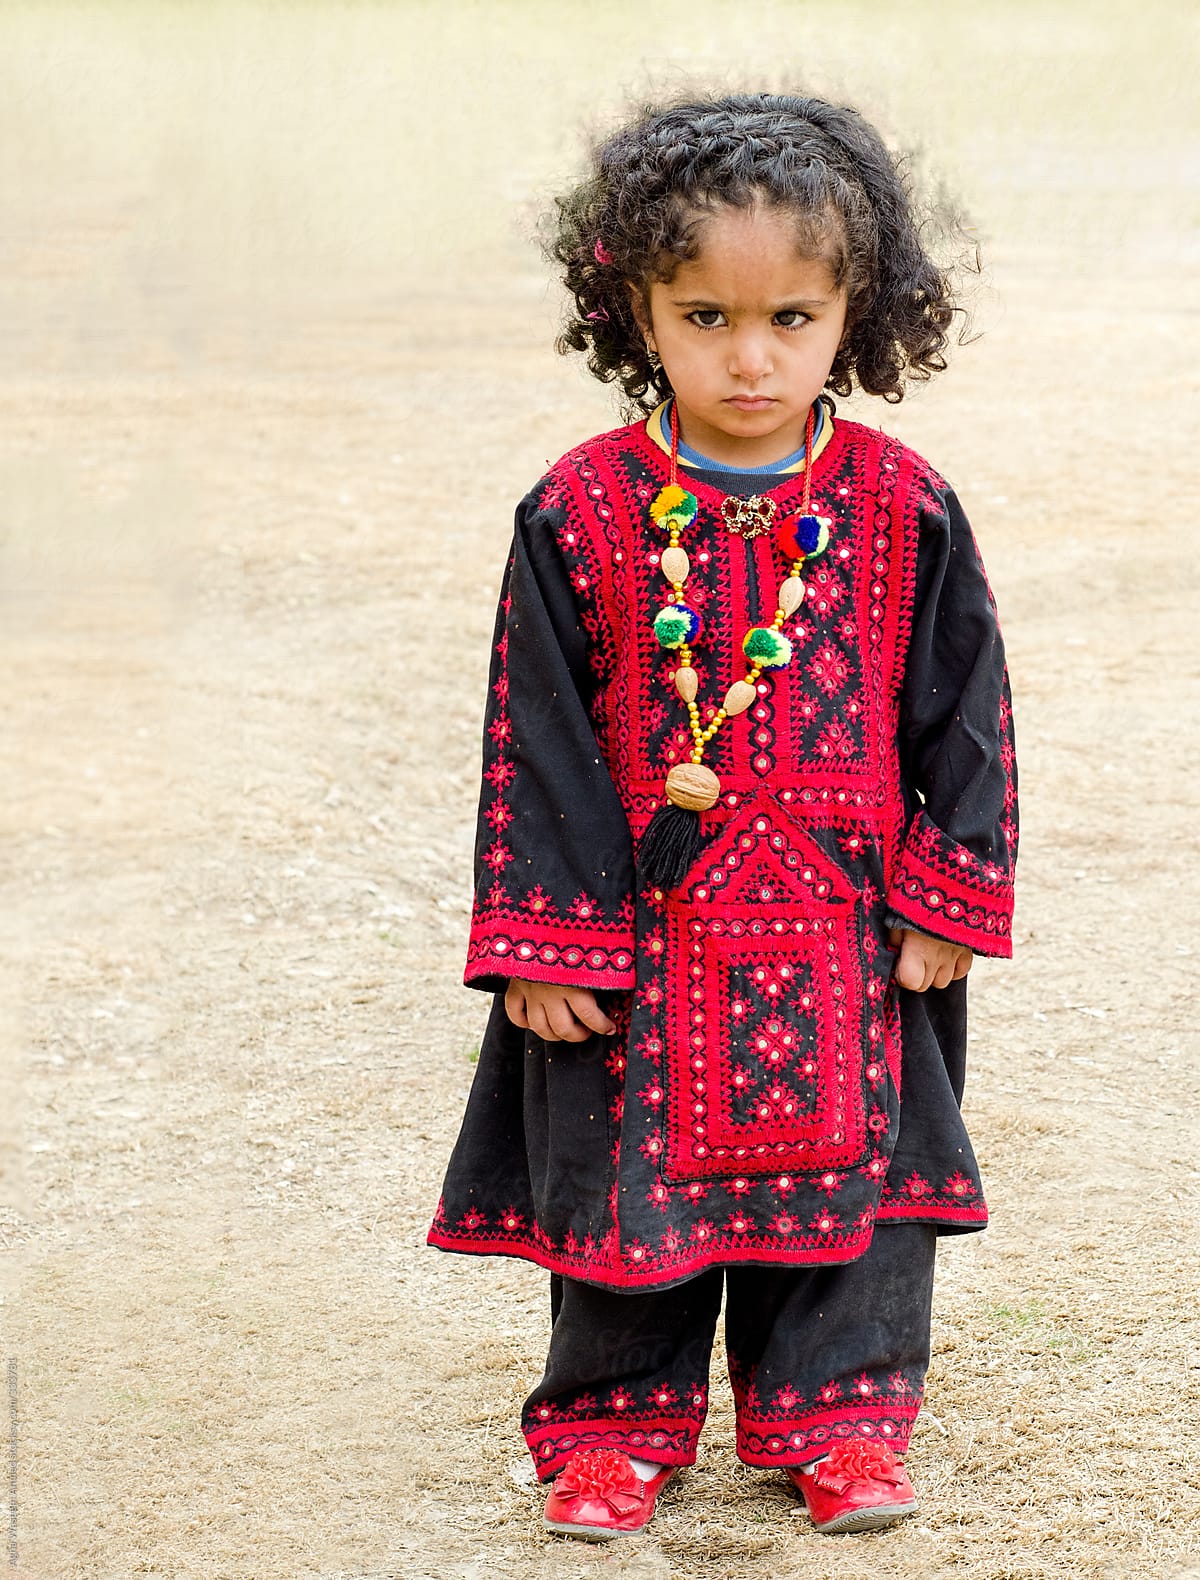 "A Balochi Girl Child" by Stocksy Contributor "Agha Waseem Ahmed" - Stocksy